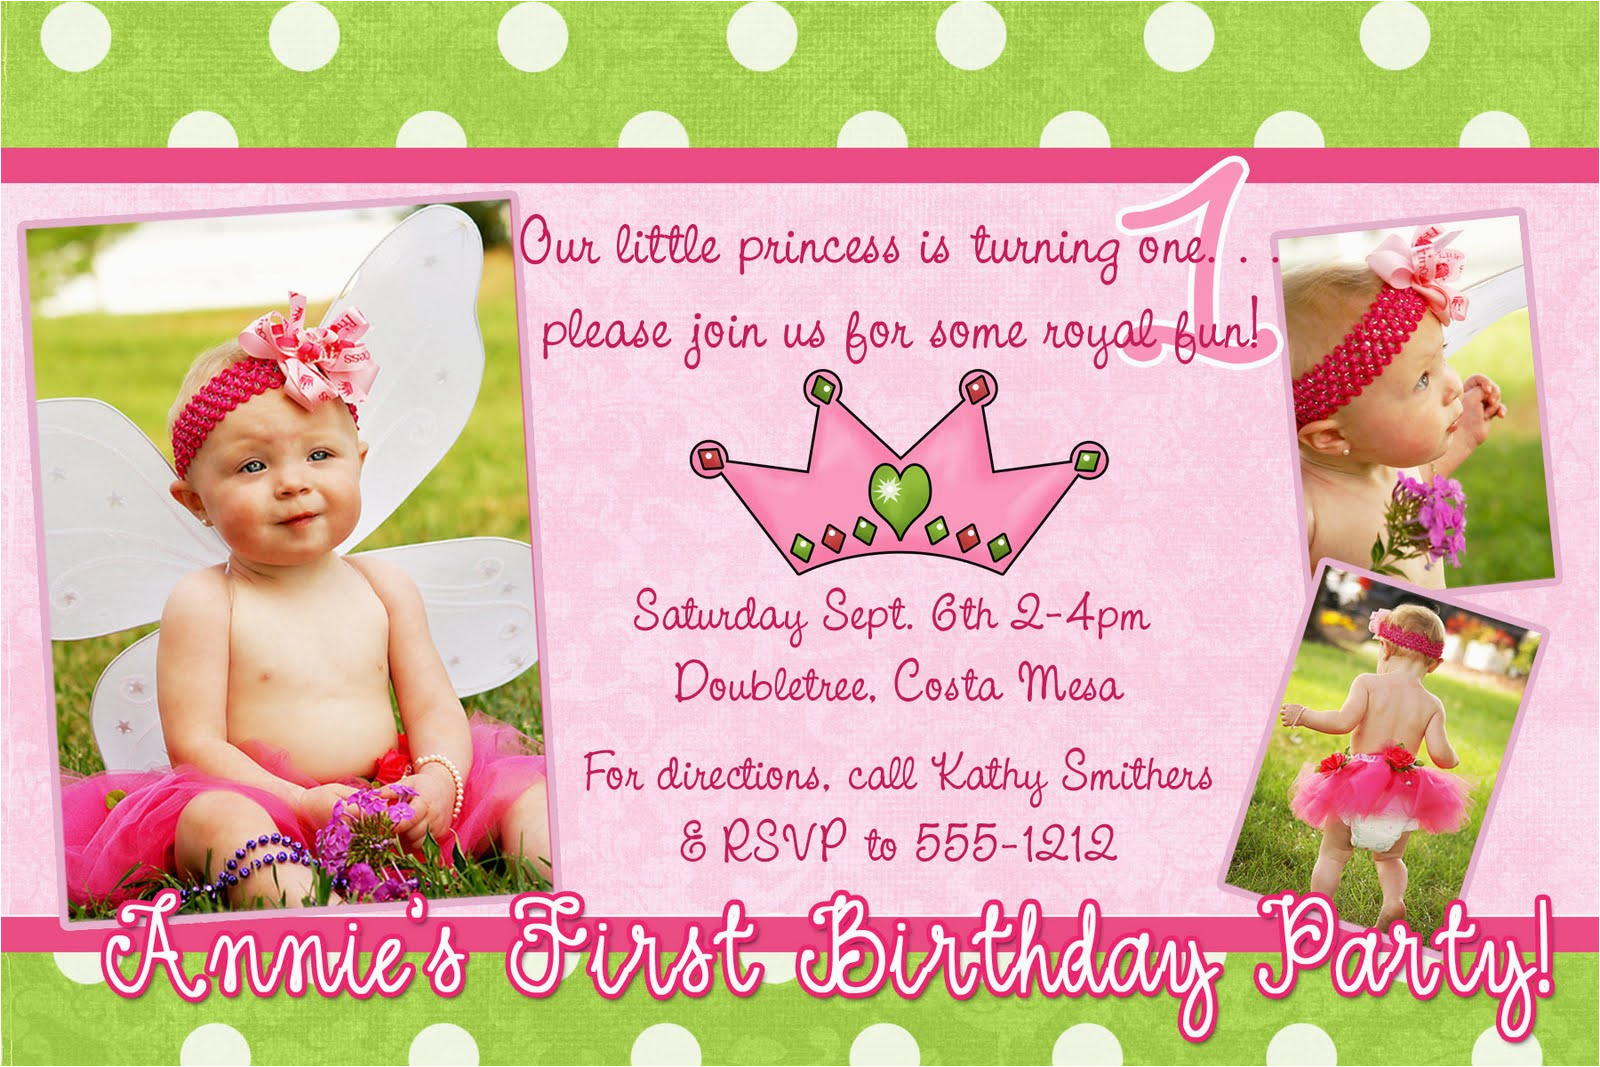 Samples Of Birthday Invitation Cards Birthday Invitation Card Samples Best Party Ideas